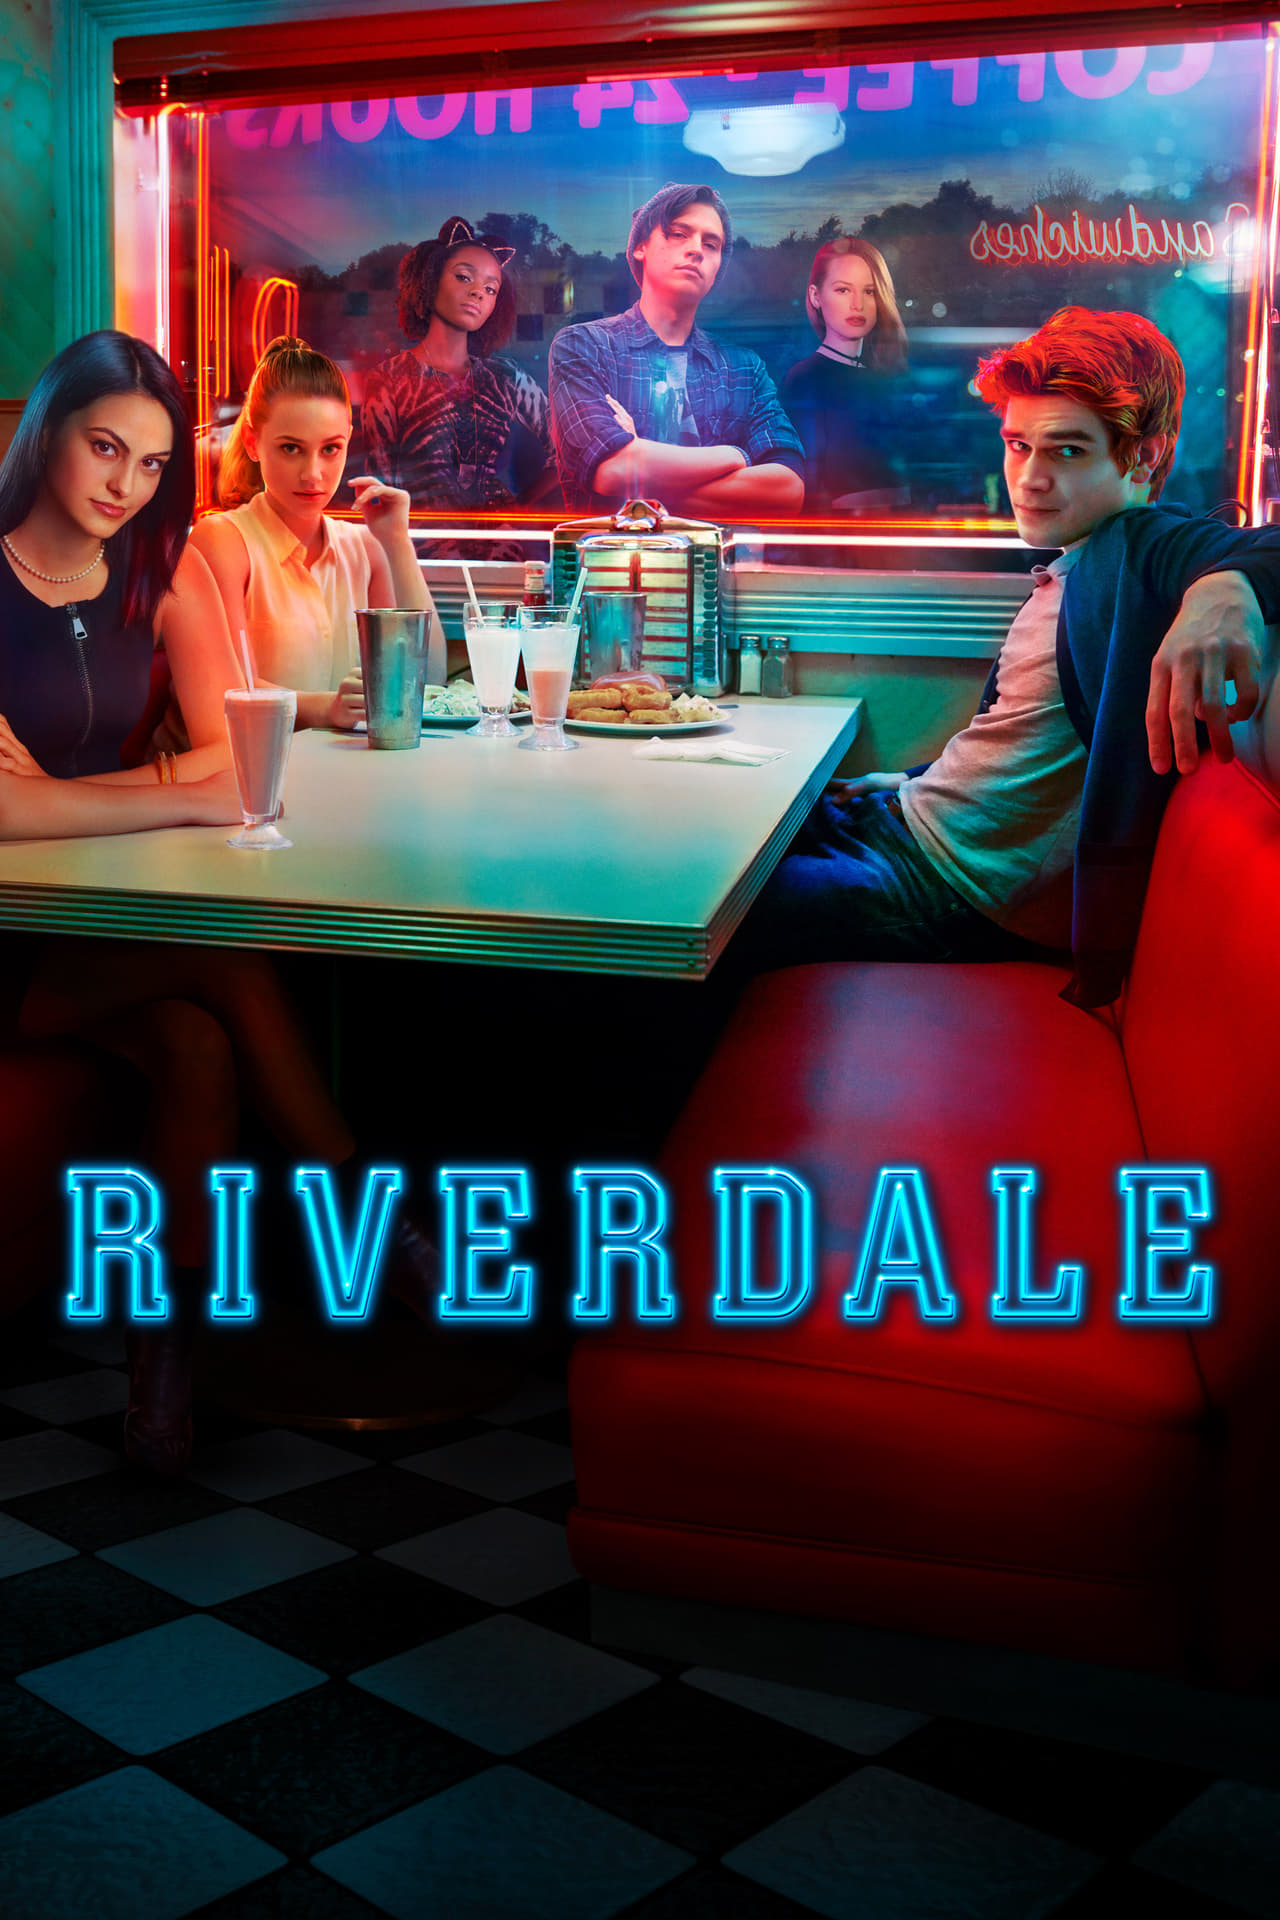 riverdale season 2 subtitles download